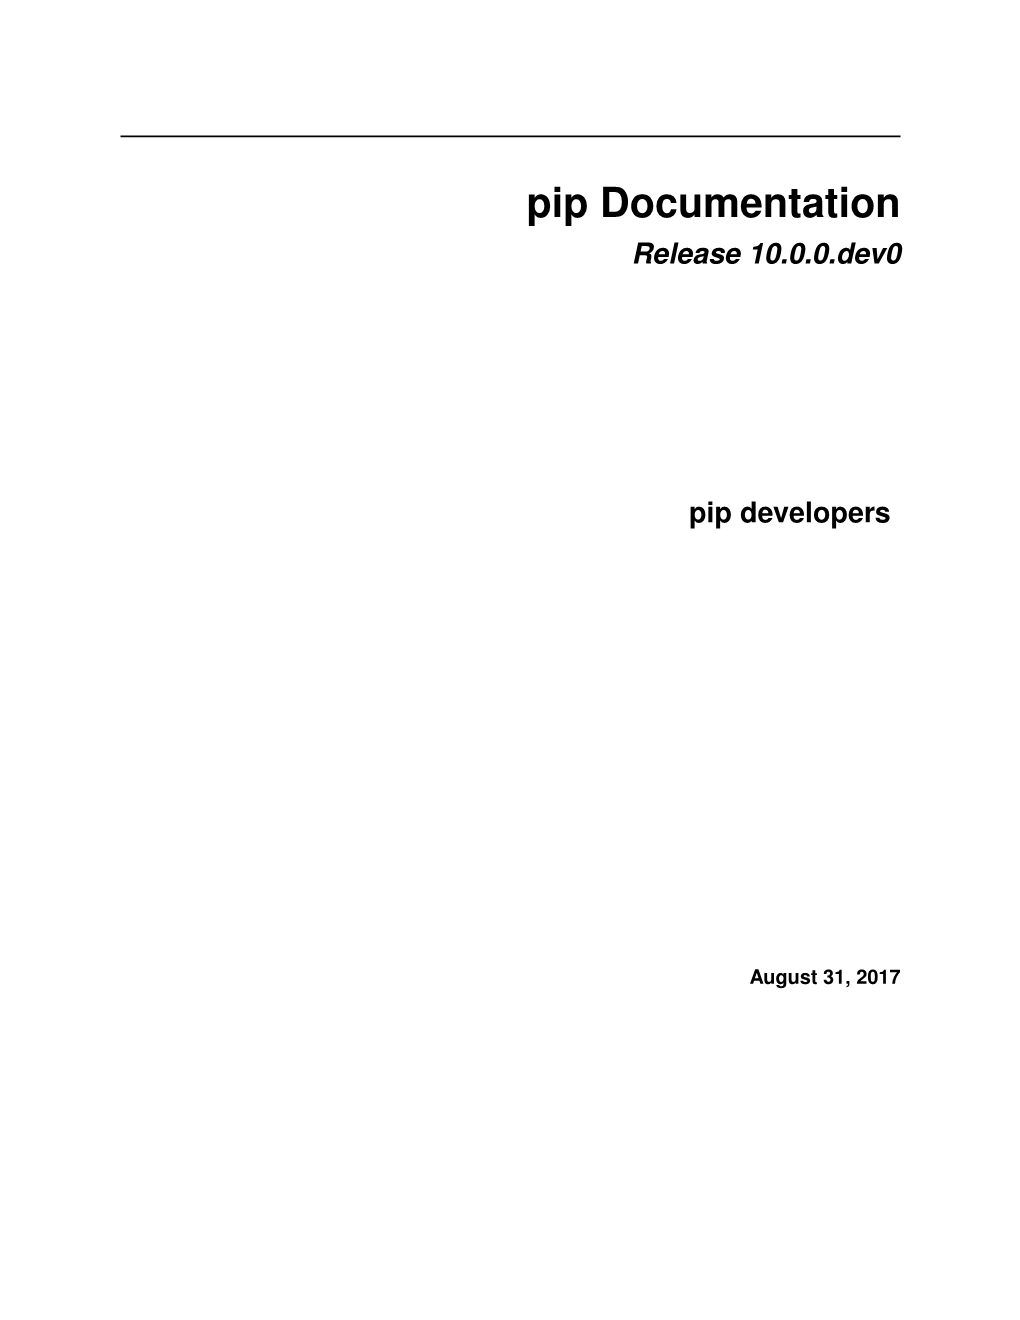 Pip Documentation Release 10.0.0.Dev0